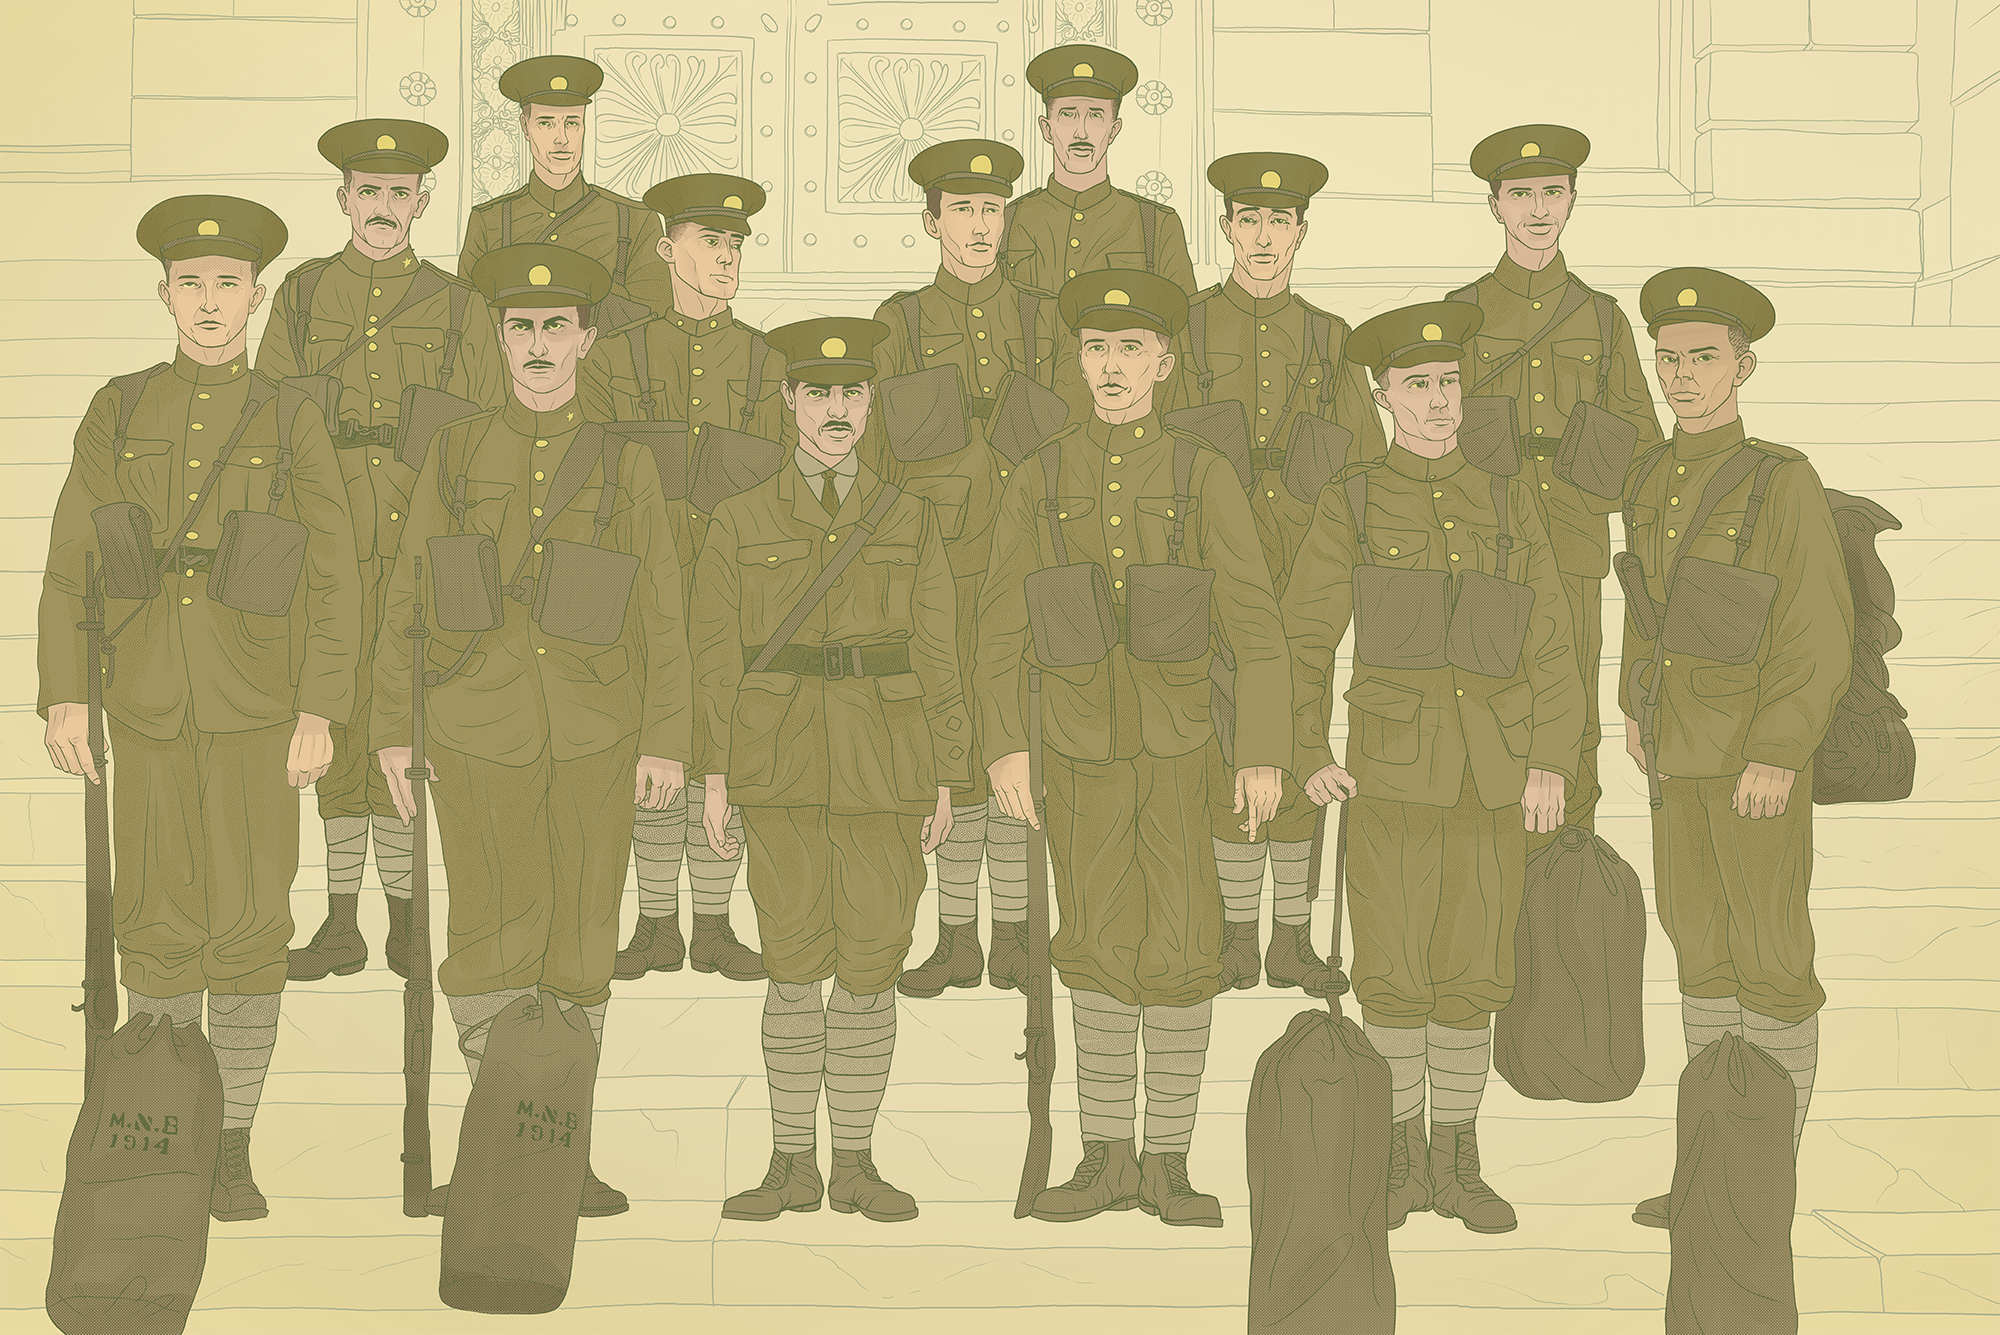 University of Alberta soldiers, Montreal, 1915. Illustration by Jordan Carson